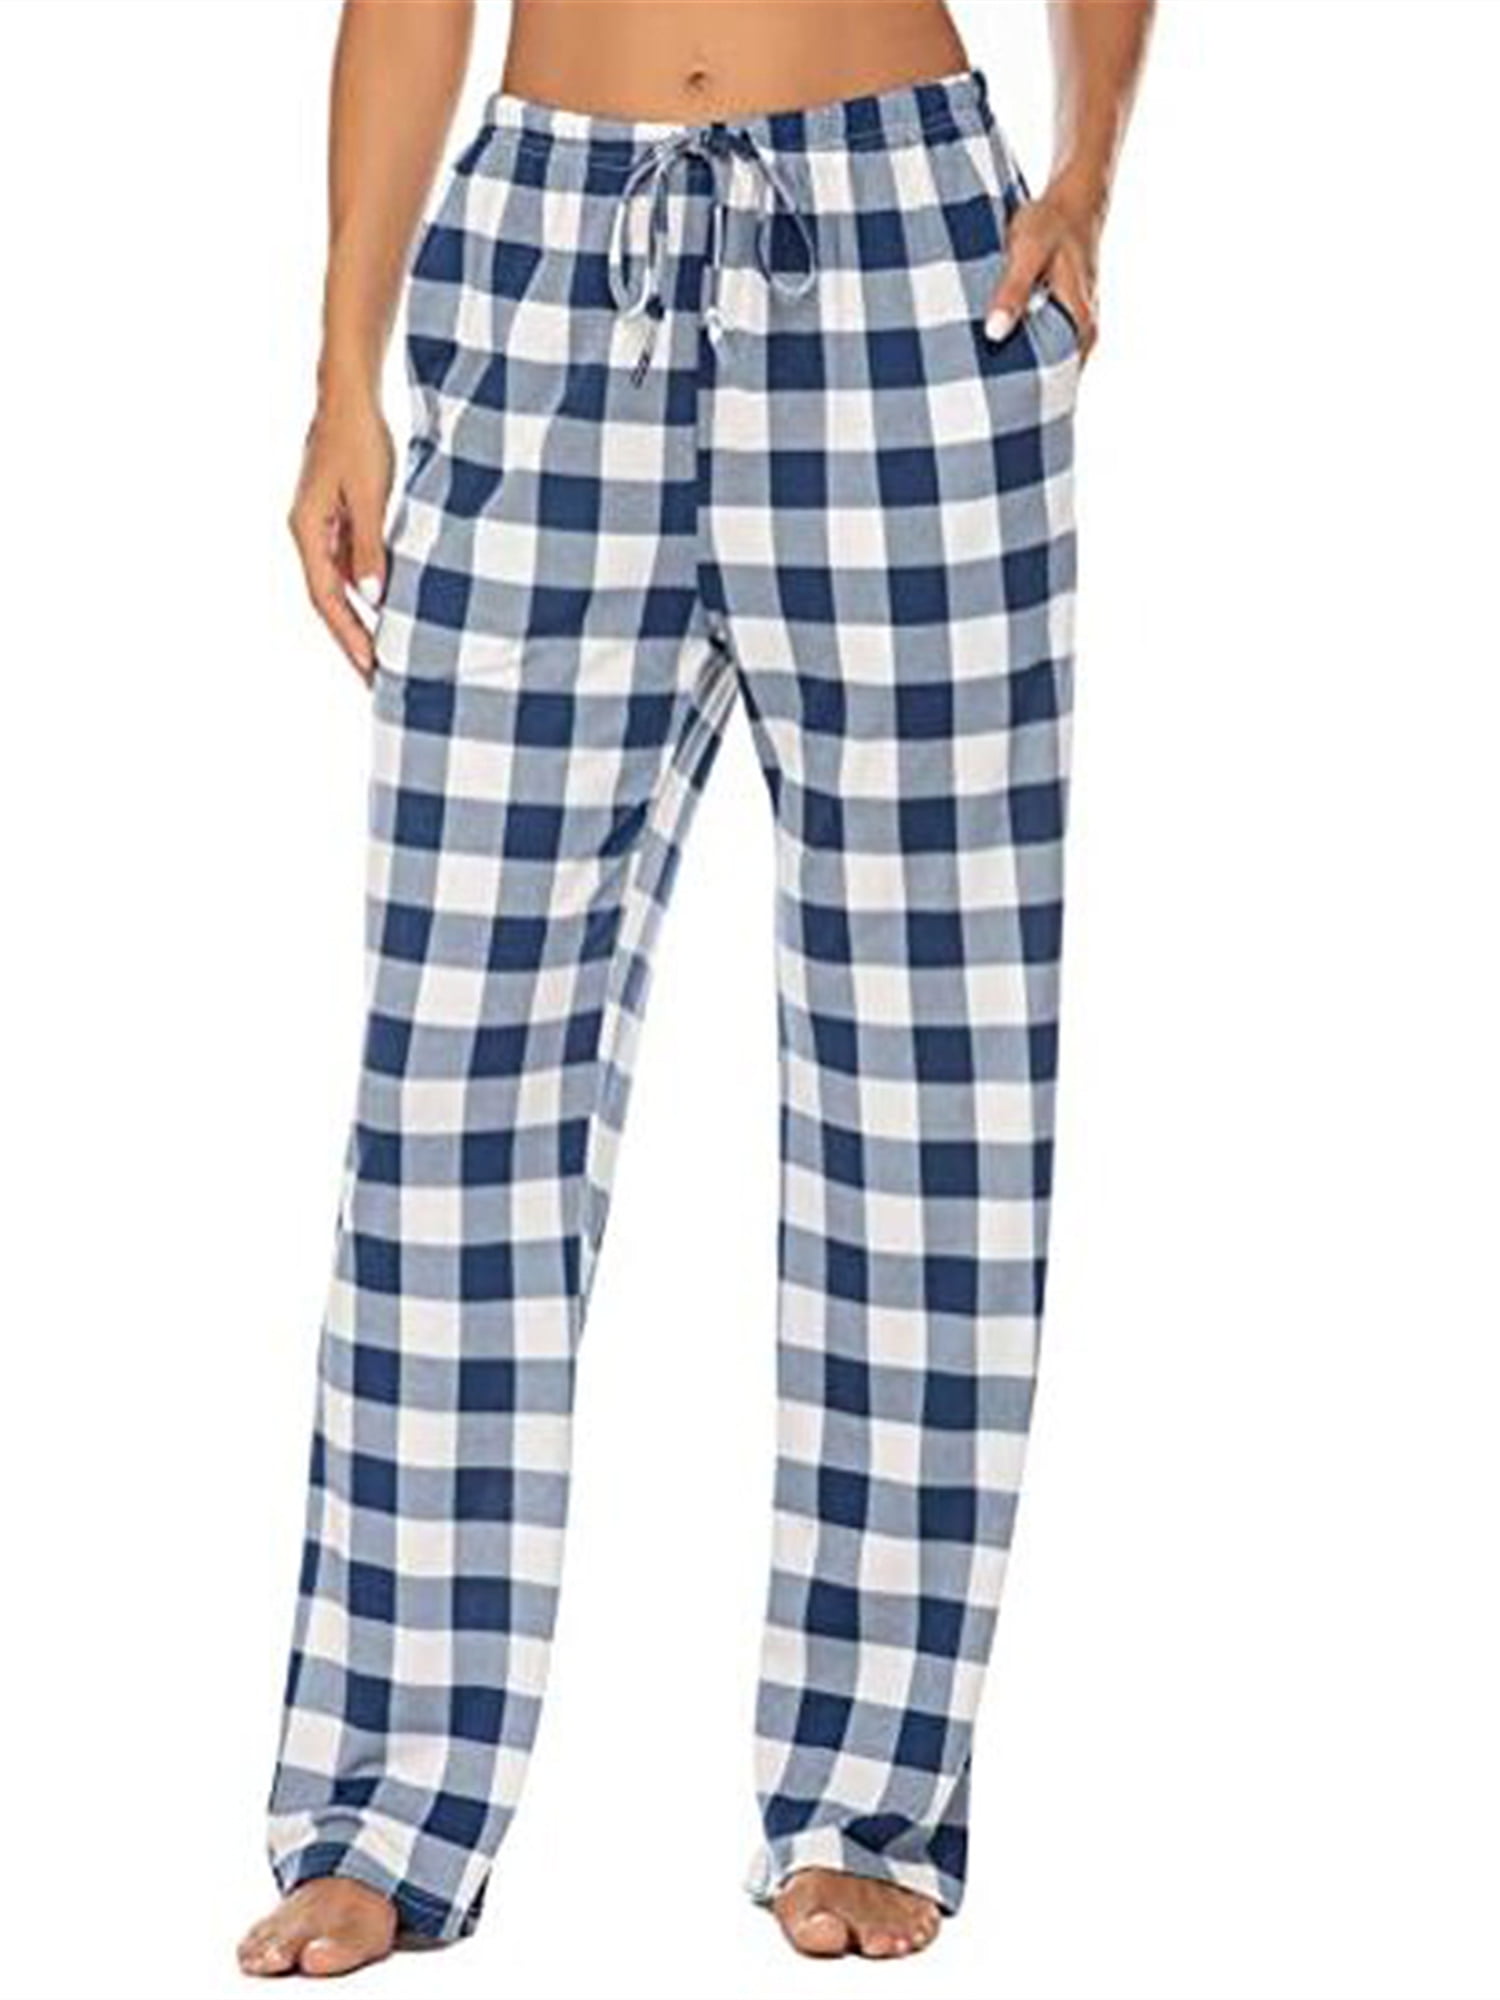 Women Lounge Pants Comfy Pajama Bottom with Pockets Stretch Plaid Sleepwear  Drawstring Pj Bottoms Pants